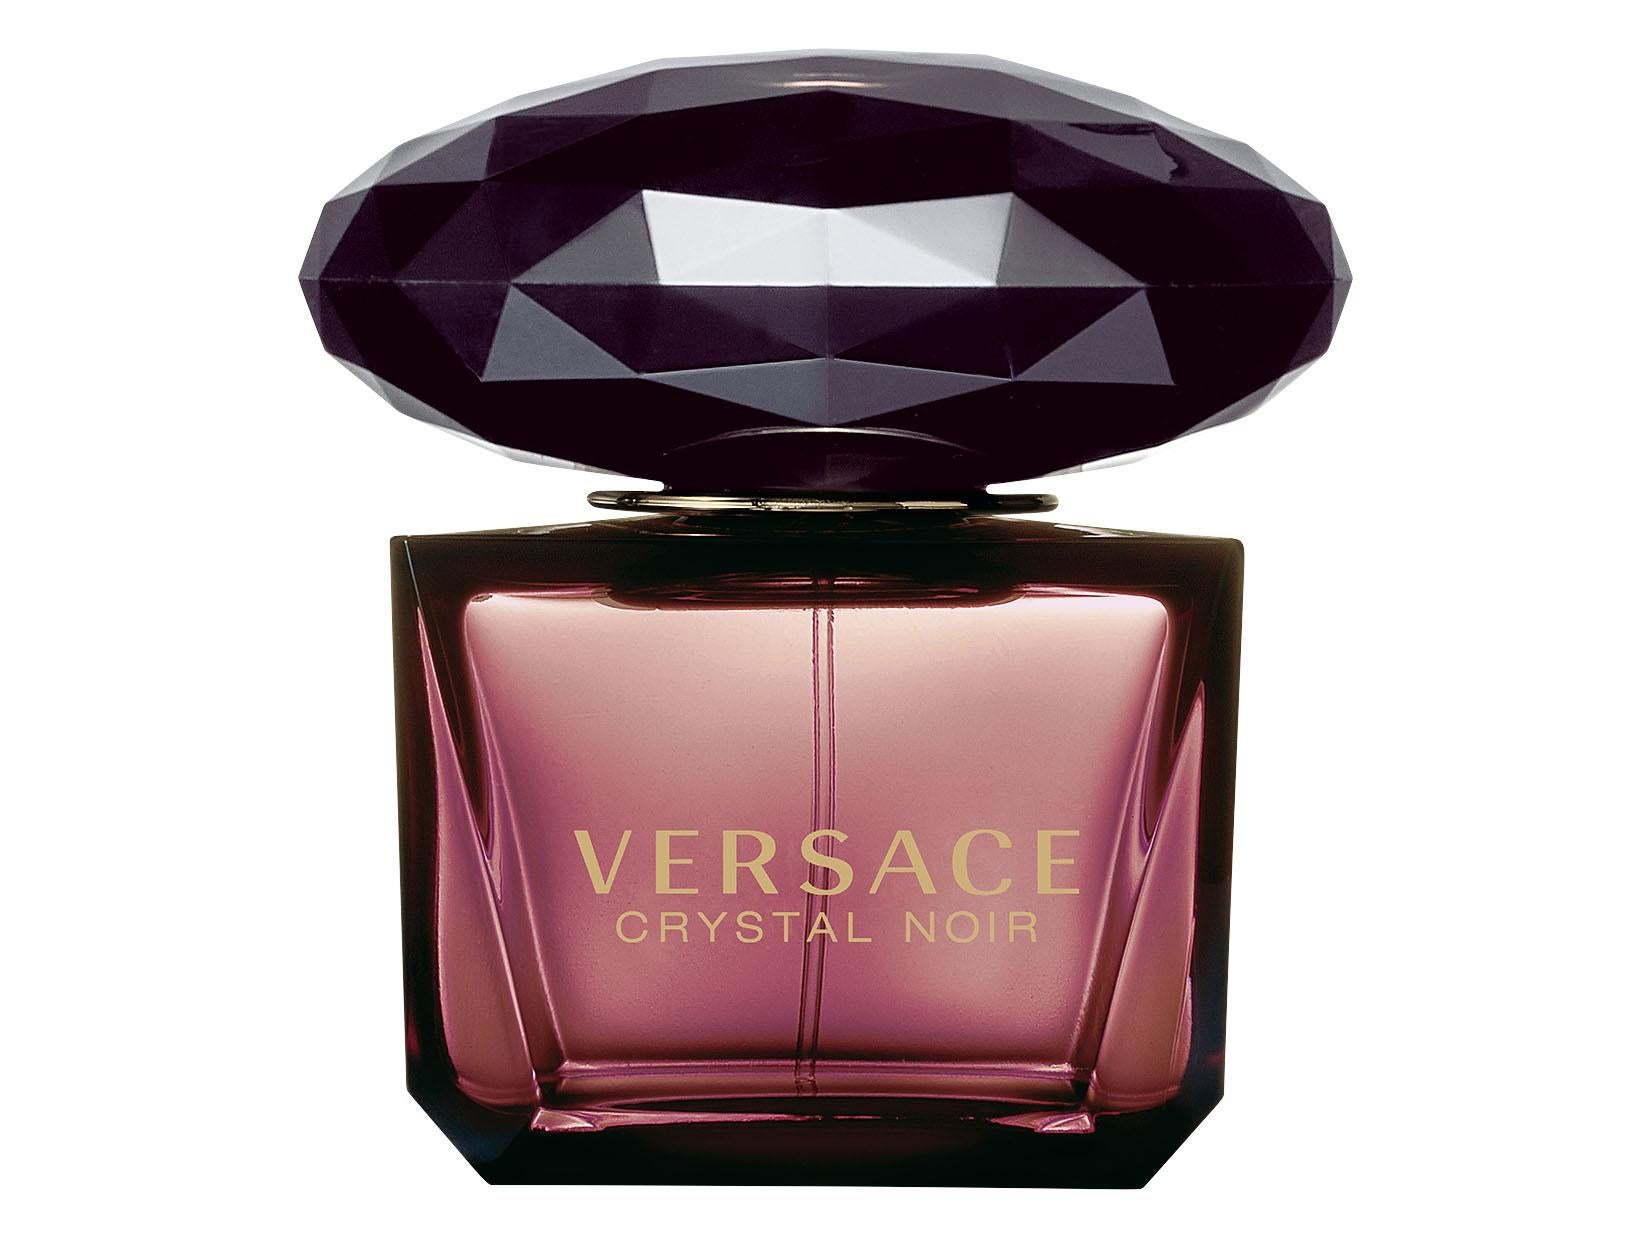 Versace Crystal Noir, £39, Superdrug